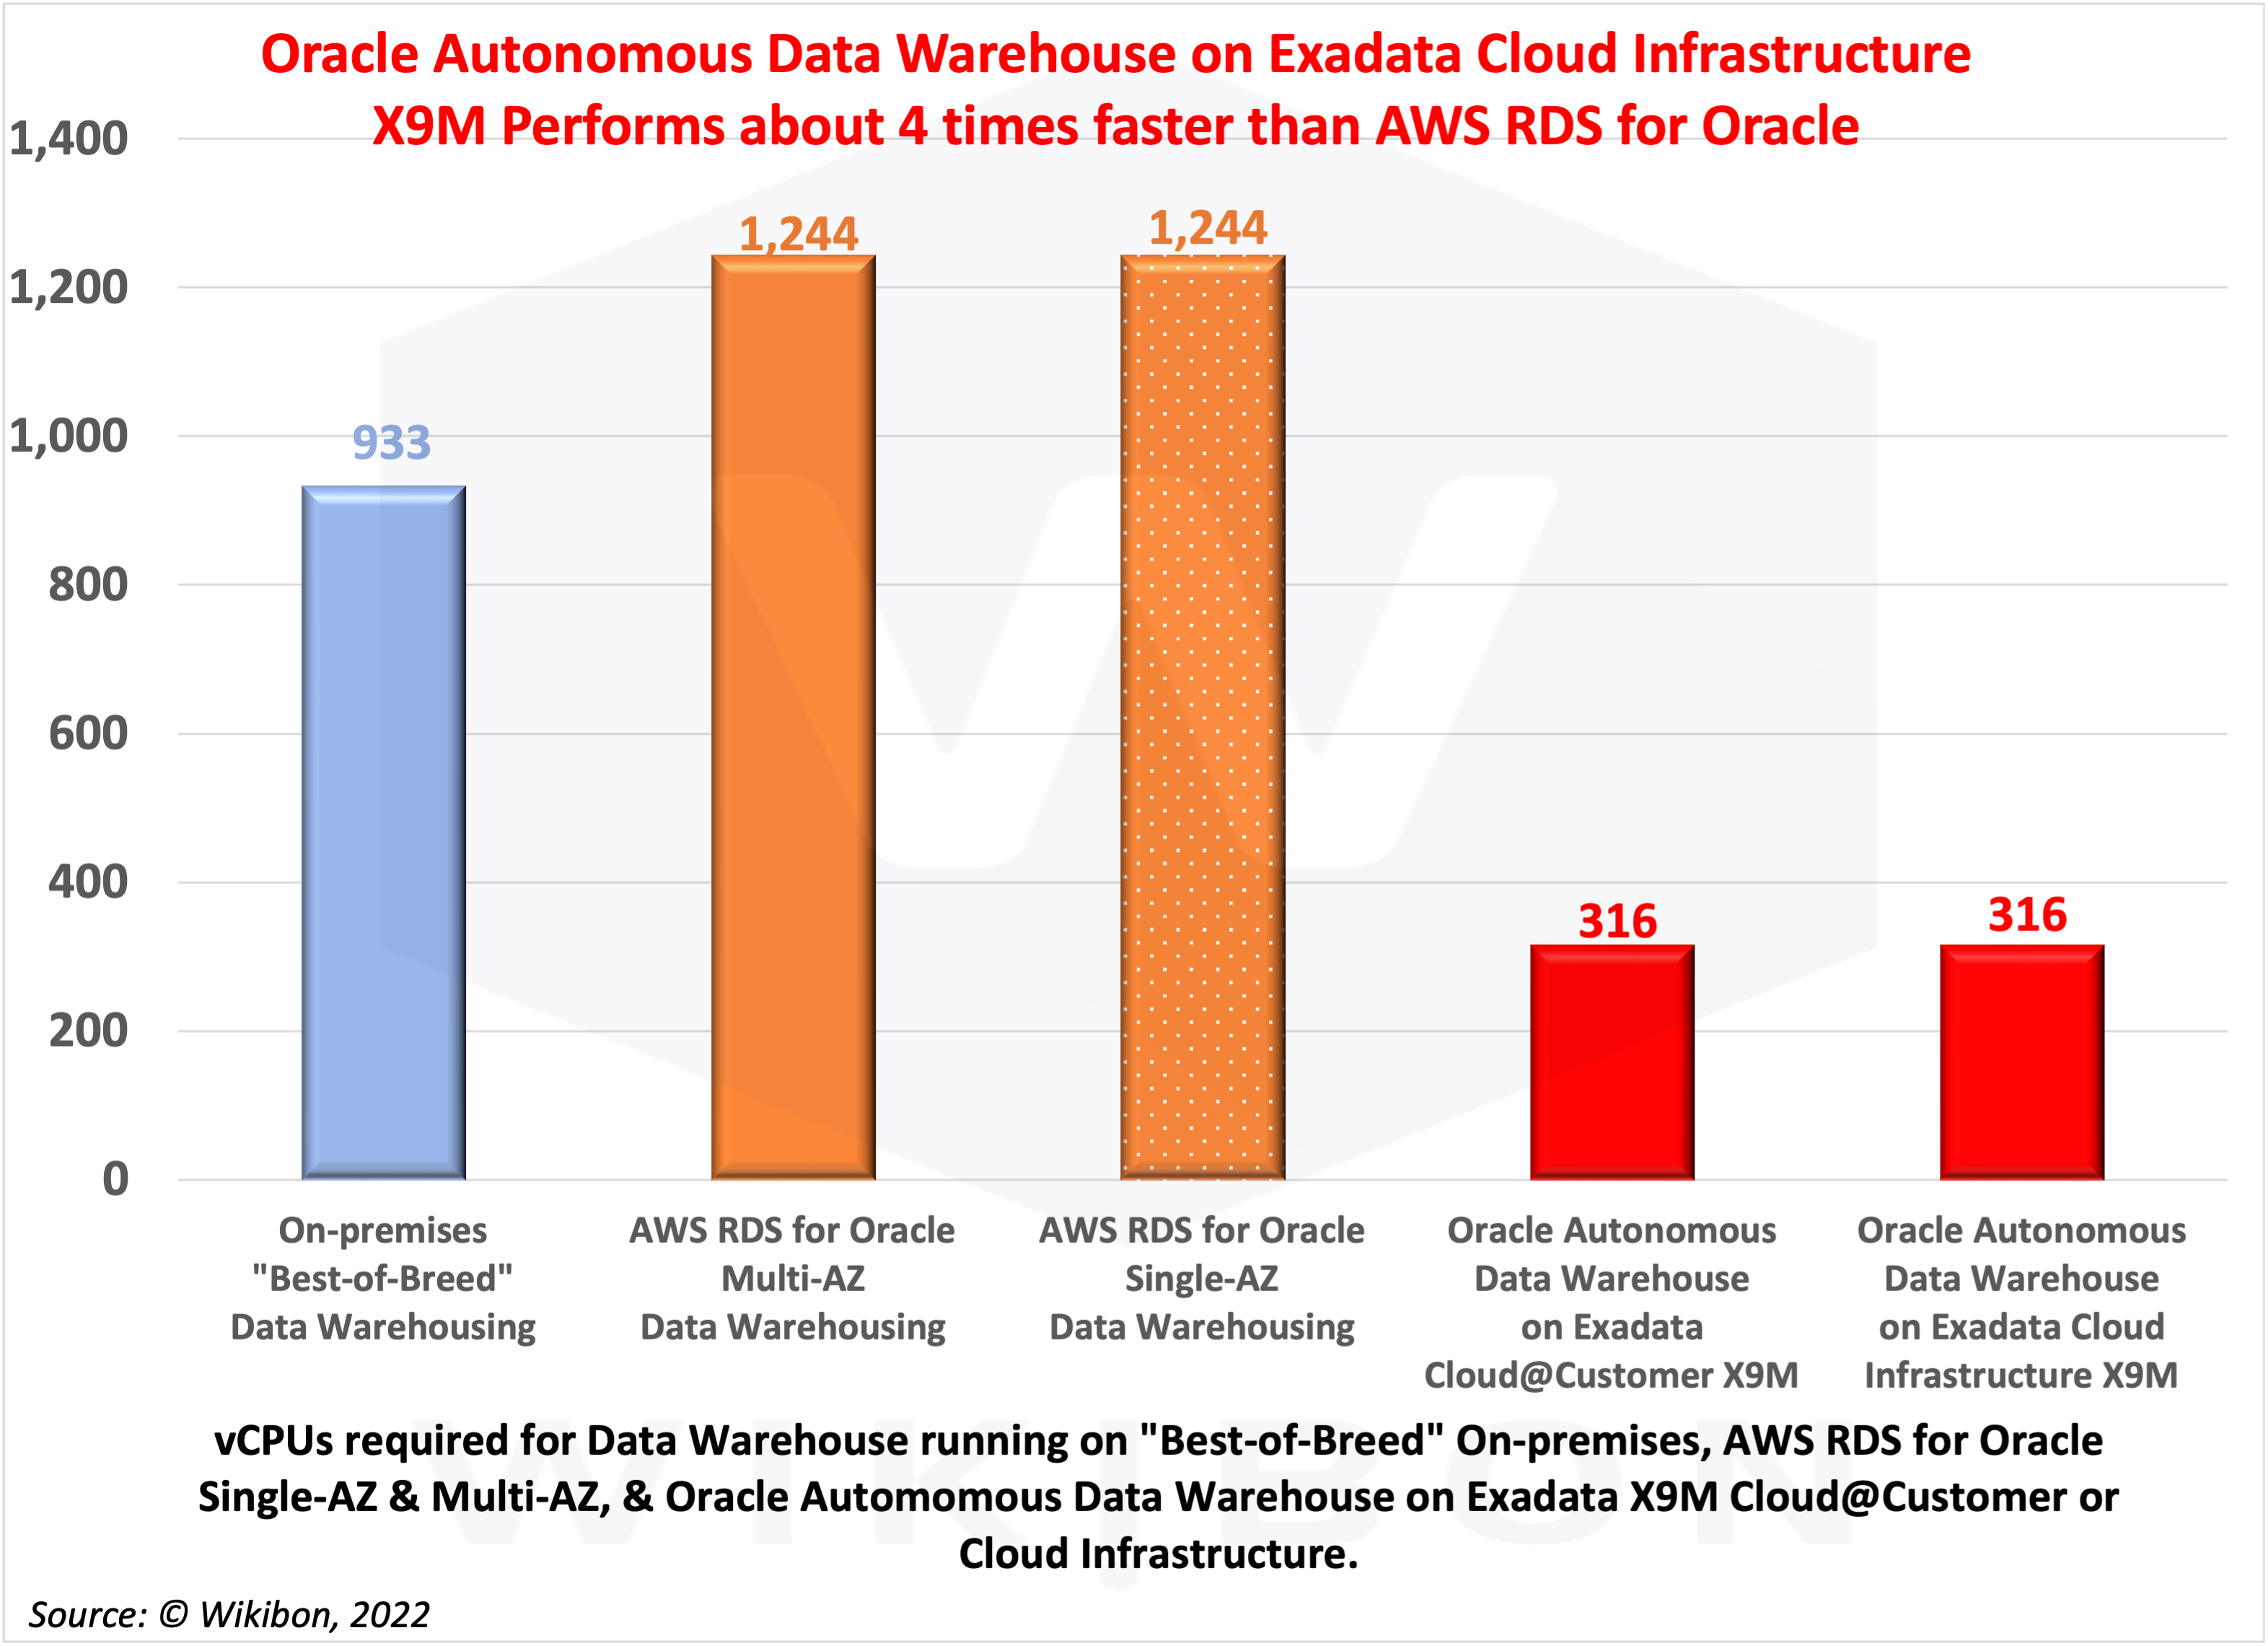 vCPU Requirements for Oracle Autonomous Data Warehouse by Platform